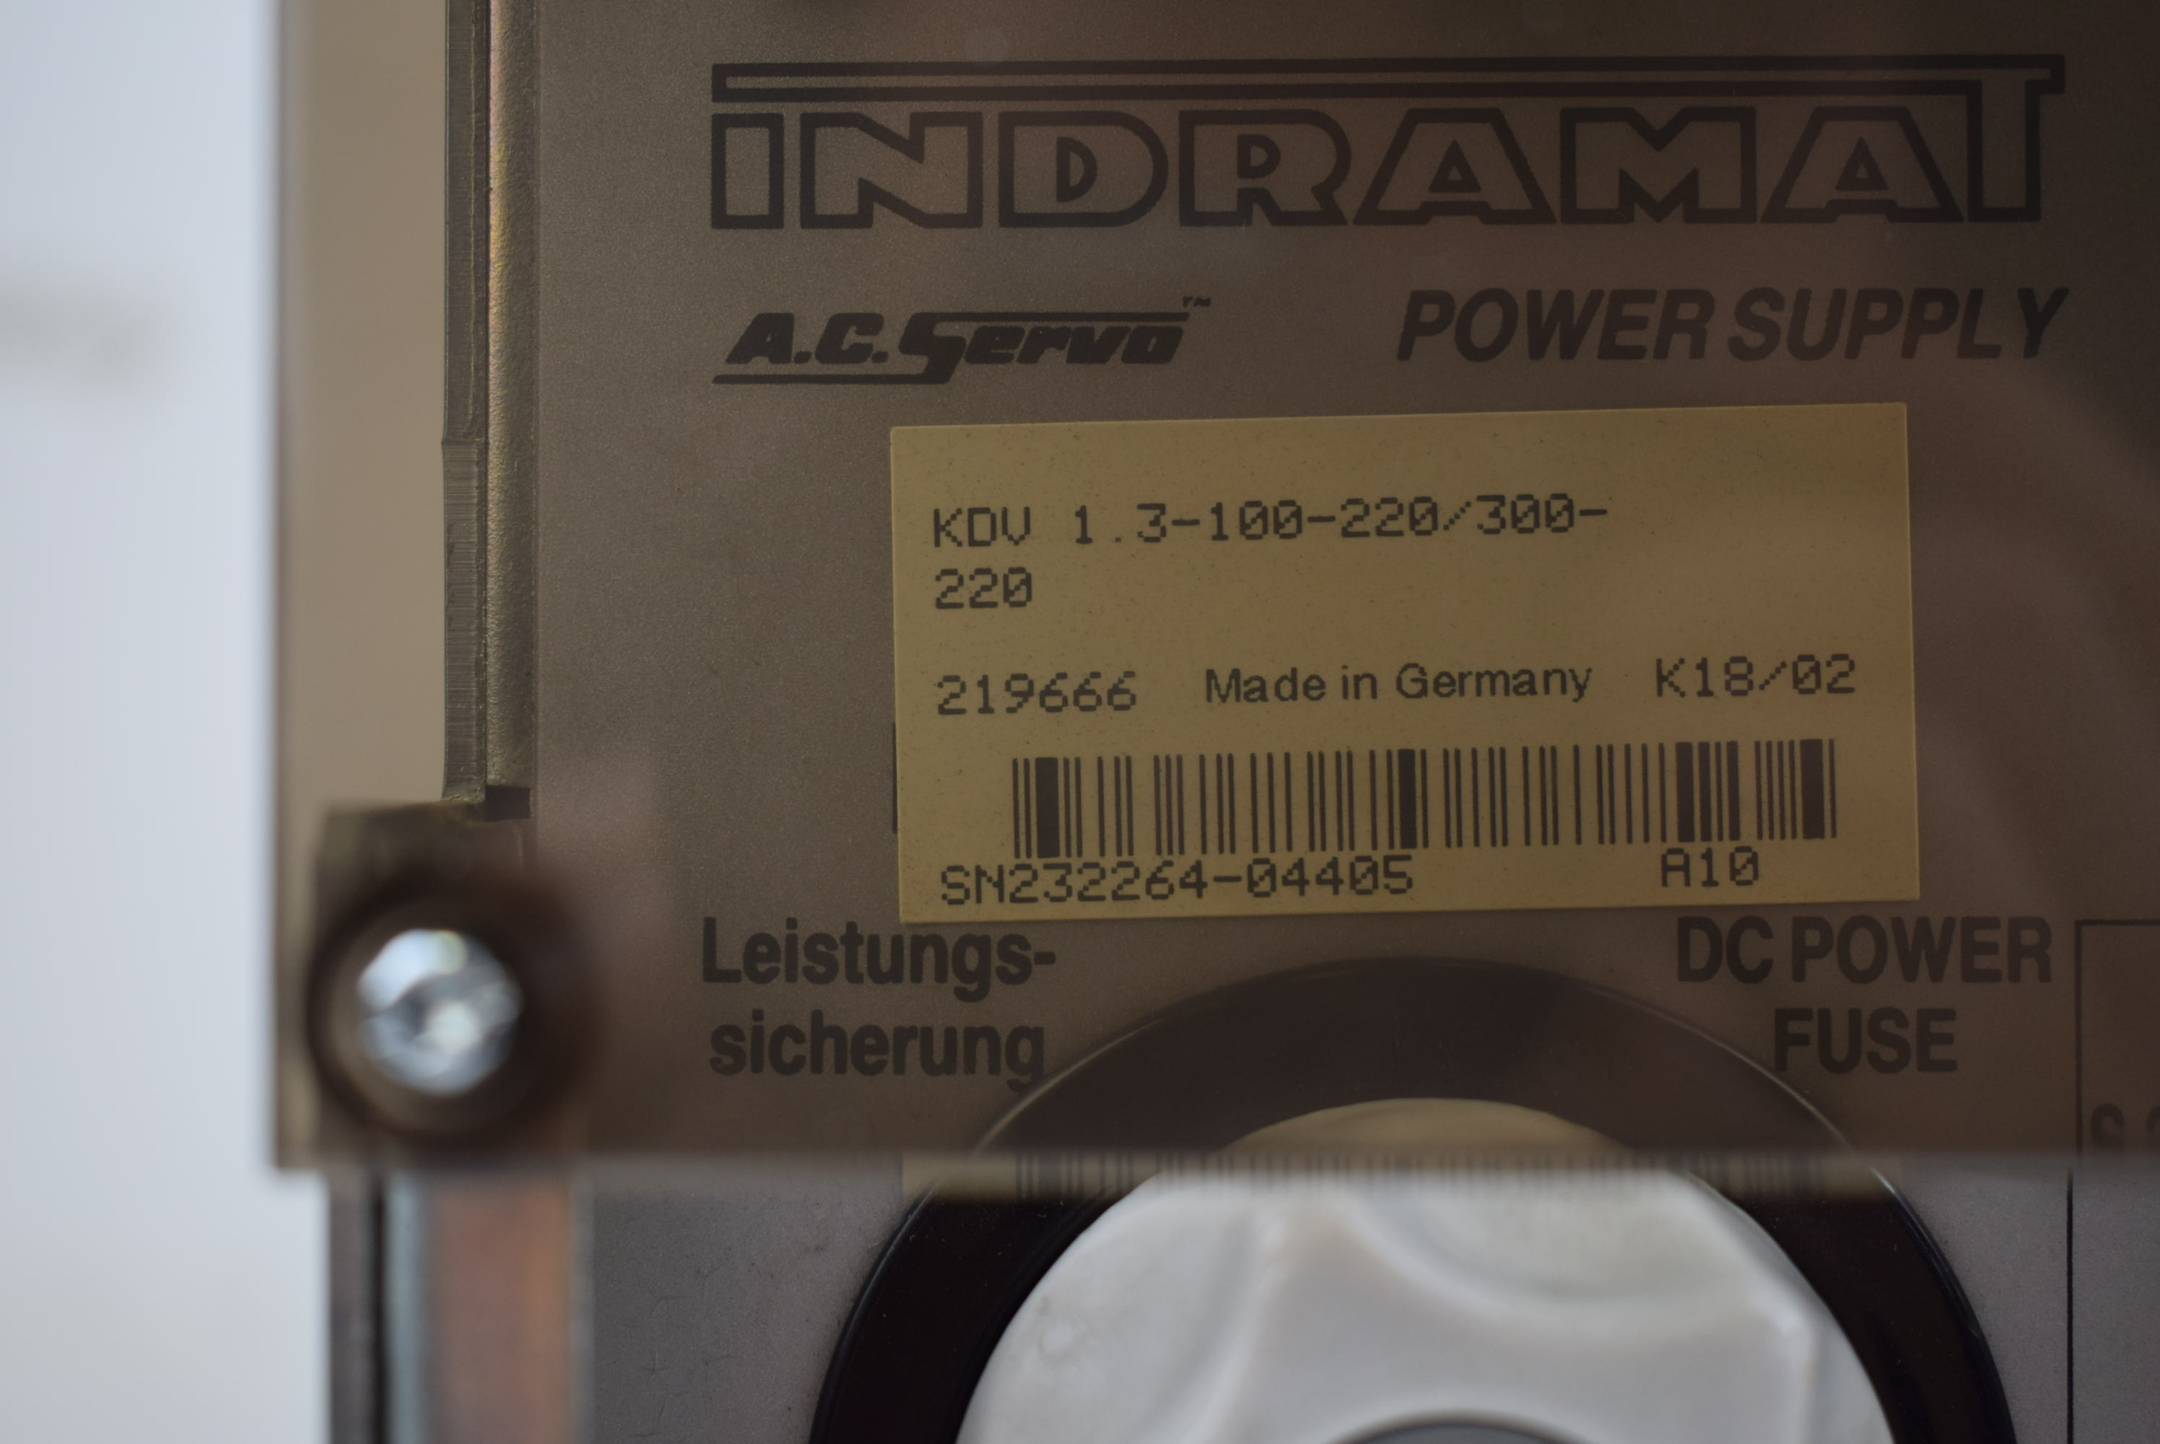 Indramat A.C. Power Supply KDV 1.3-100-220/300-220 ( KDV1.3-100-220/300-220-W1 )